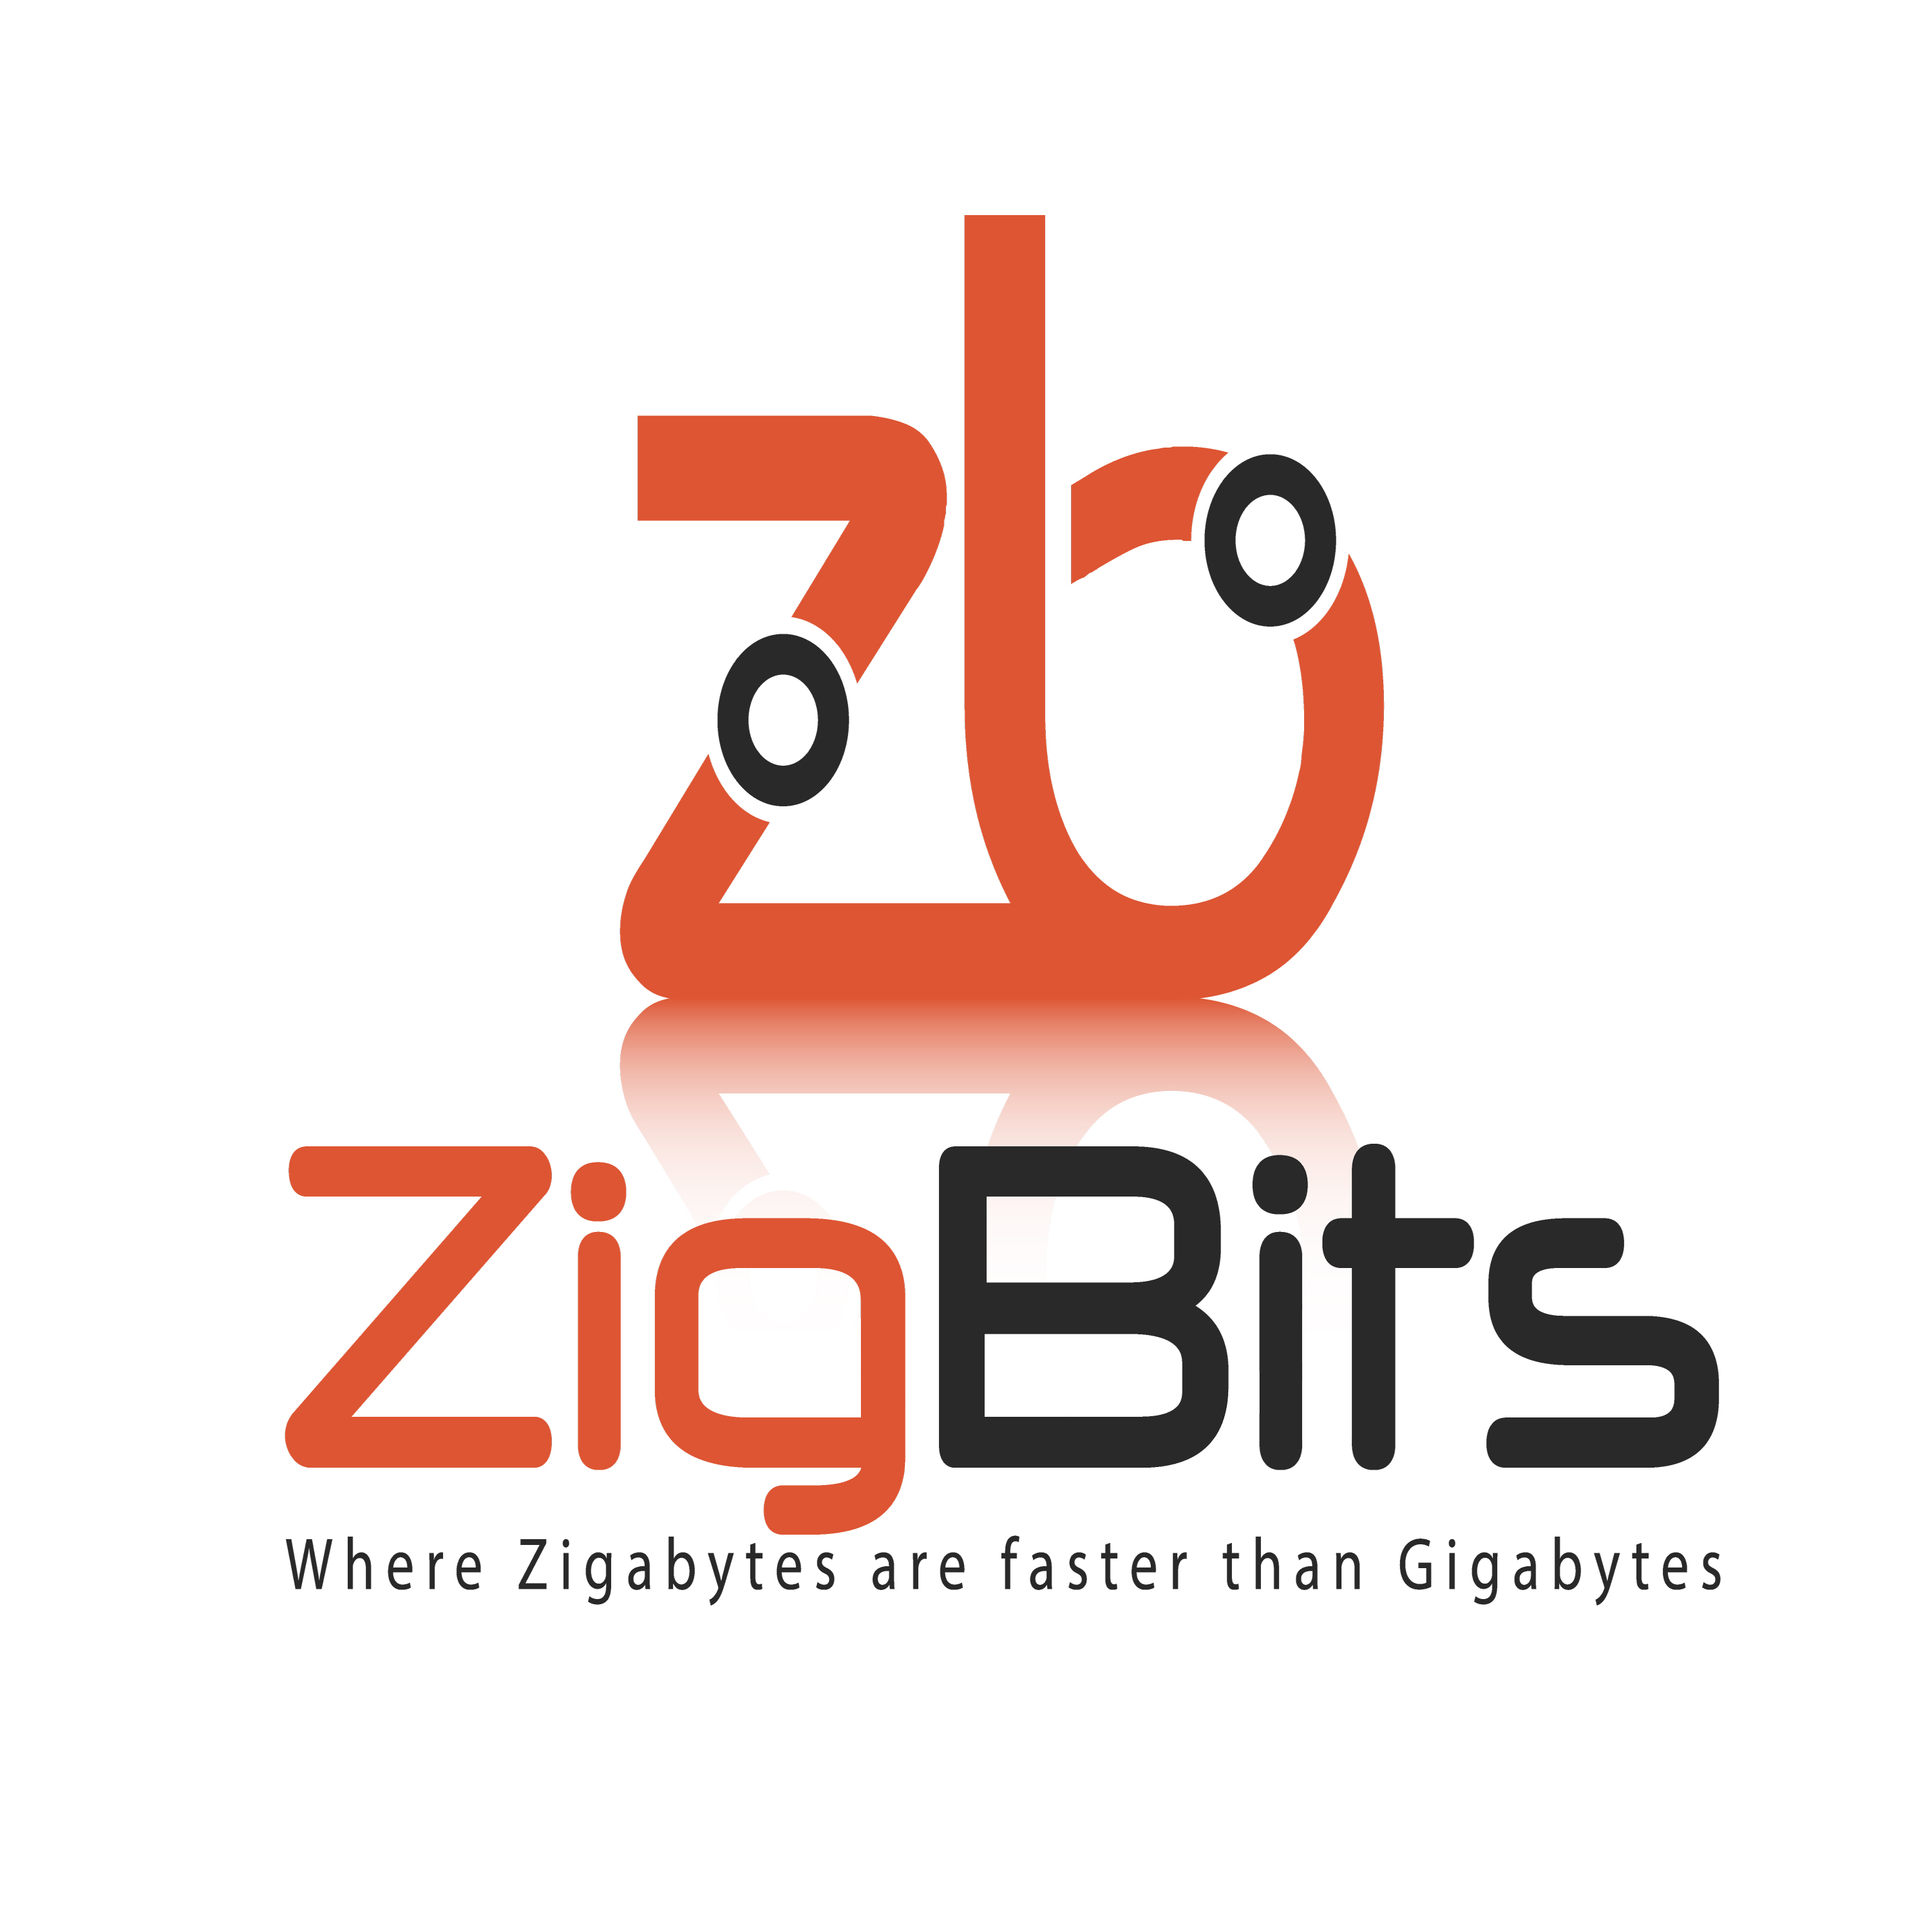 Zigbits Network Design Podcast